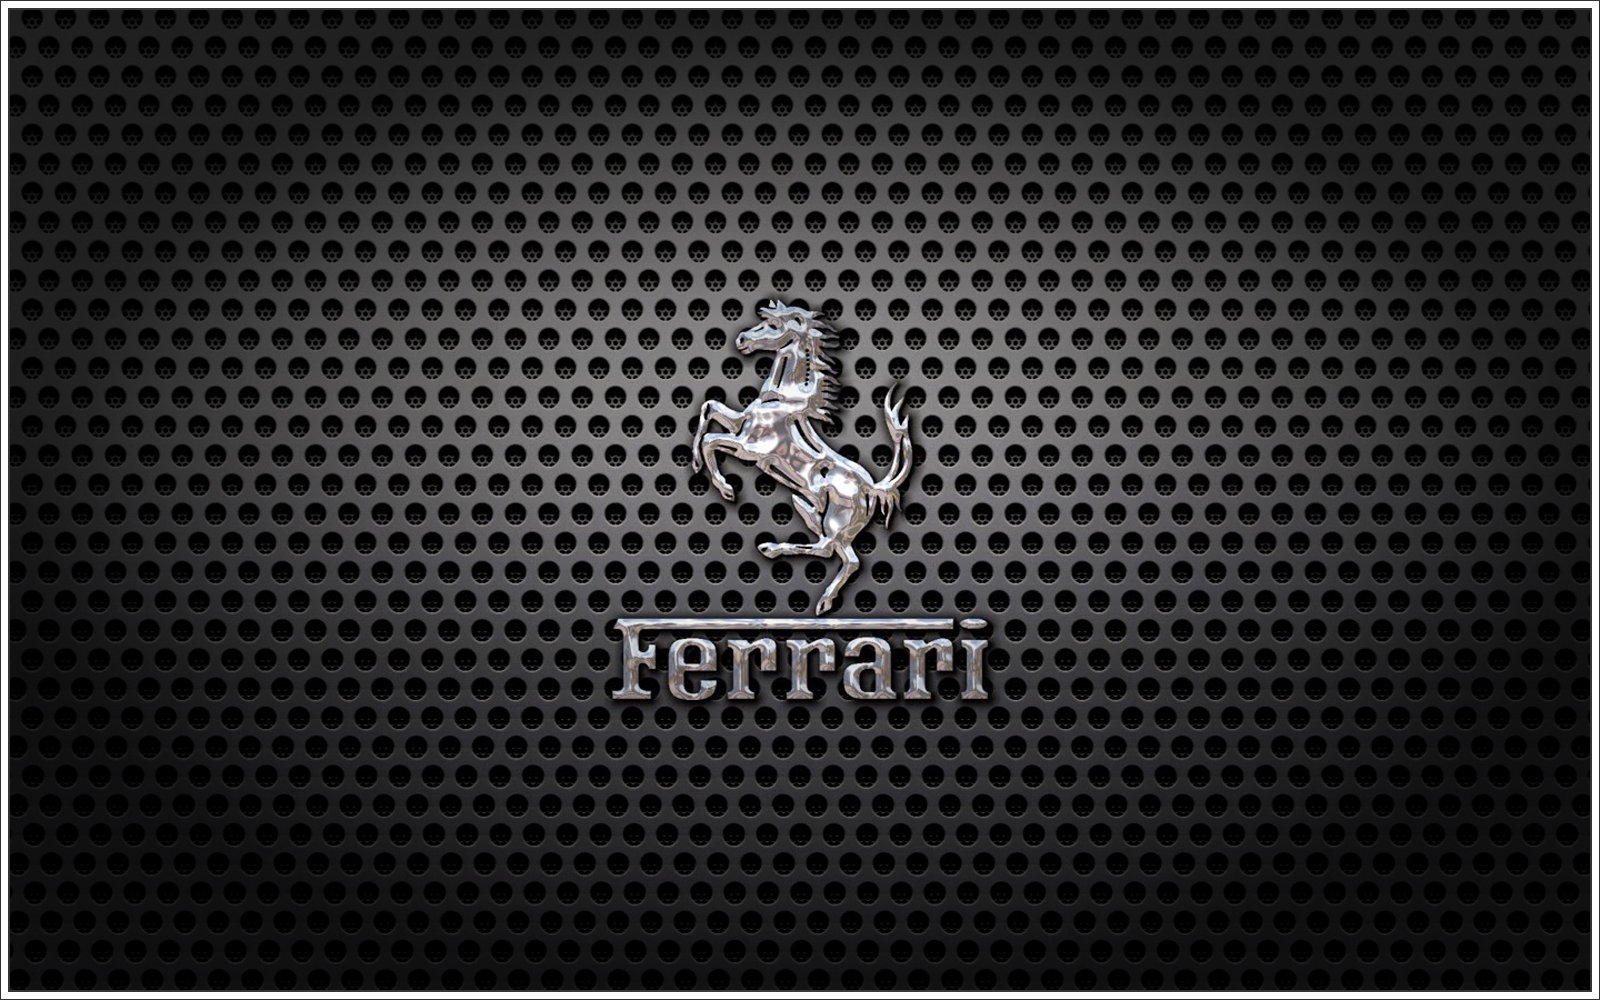 Ferrari logo description